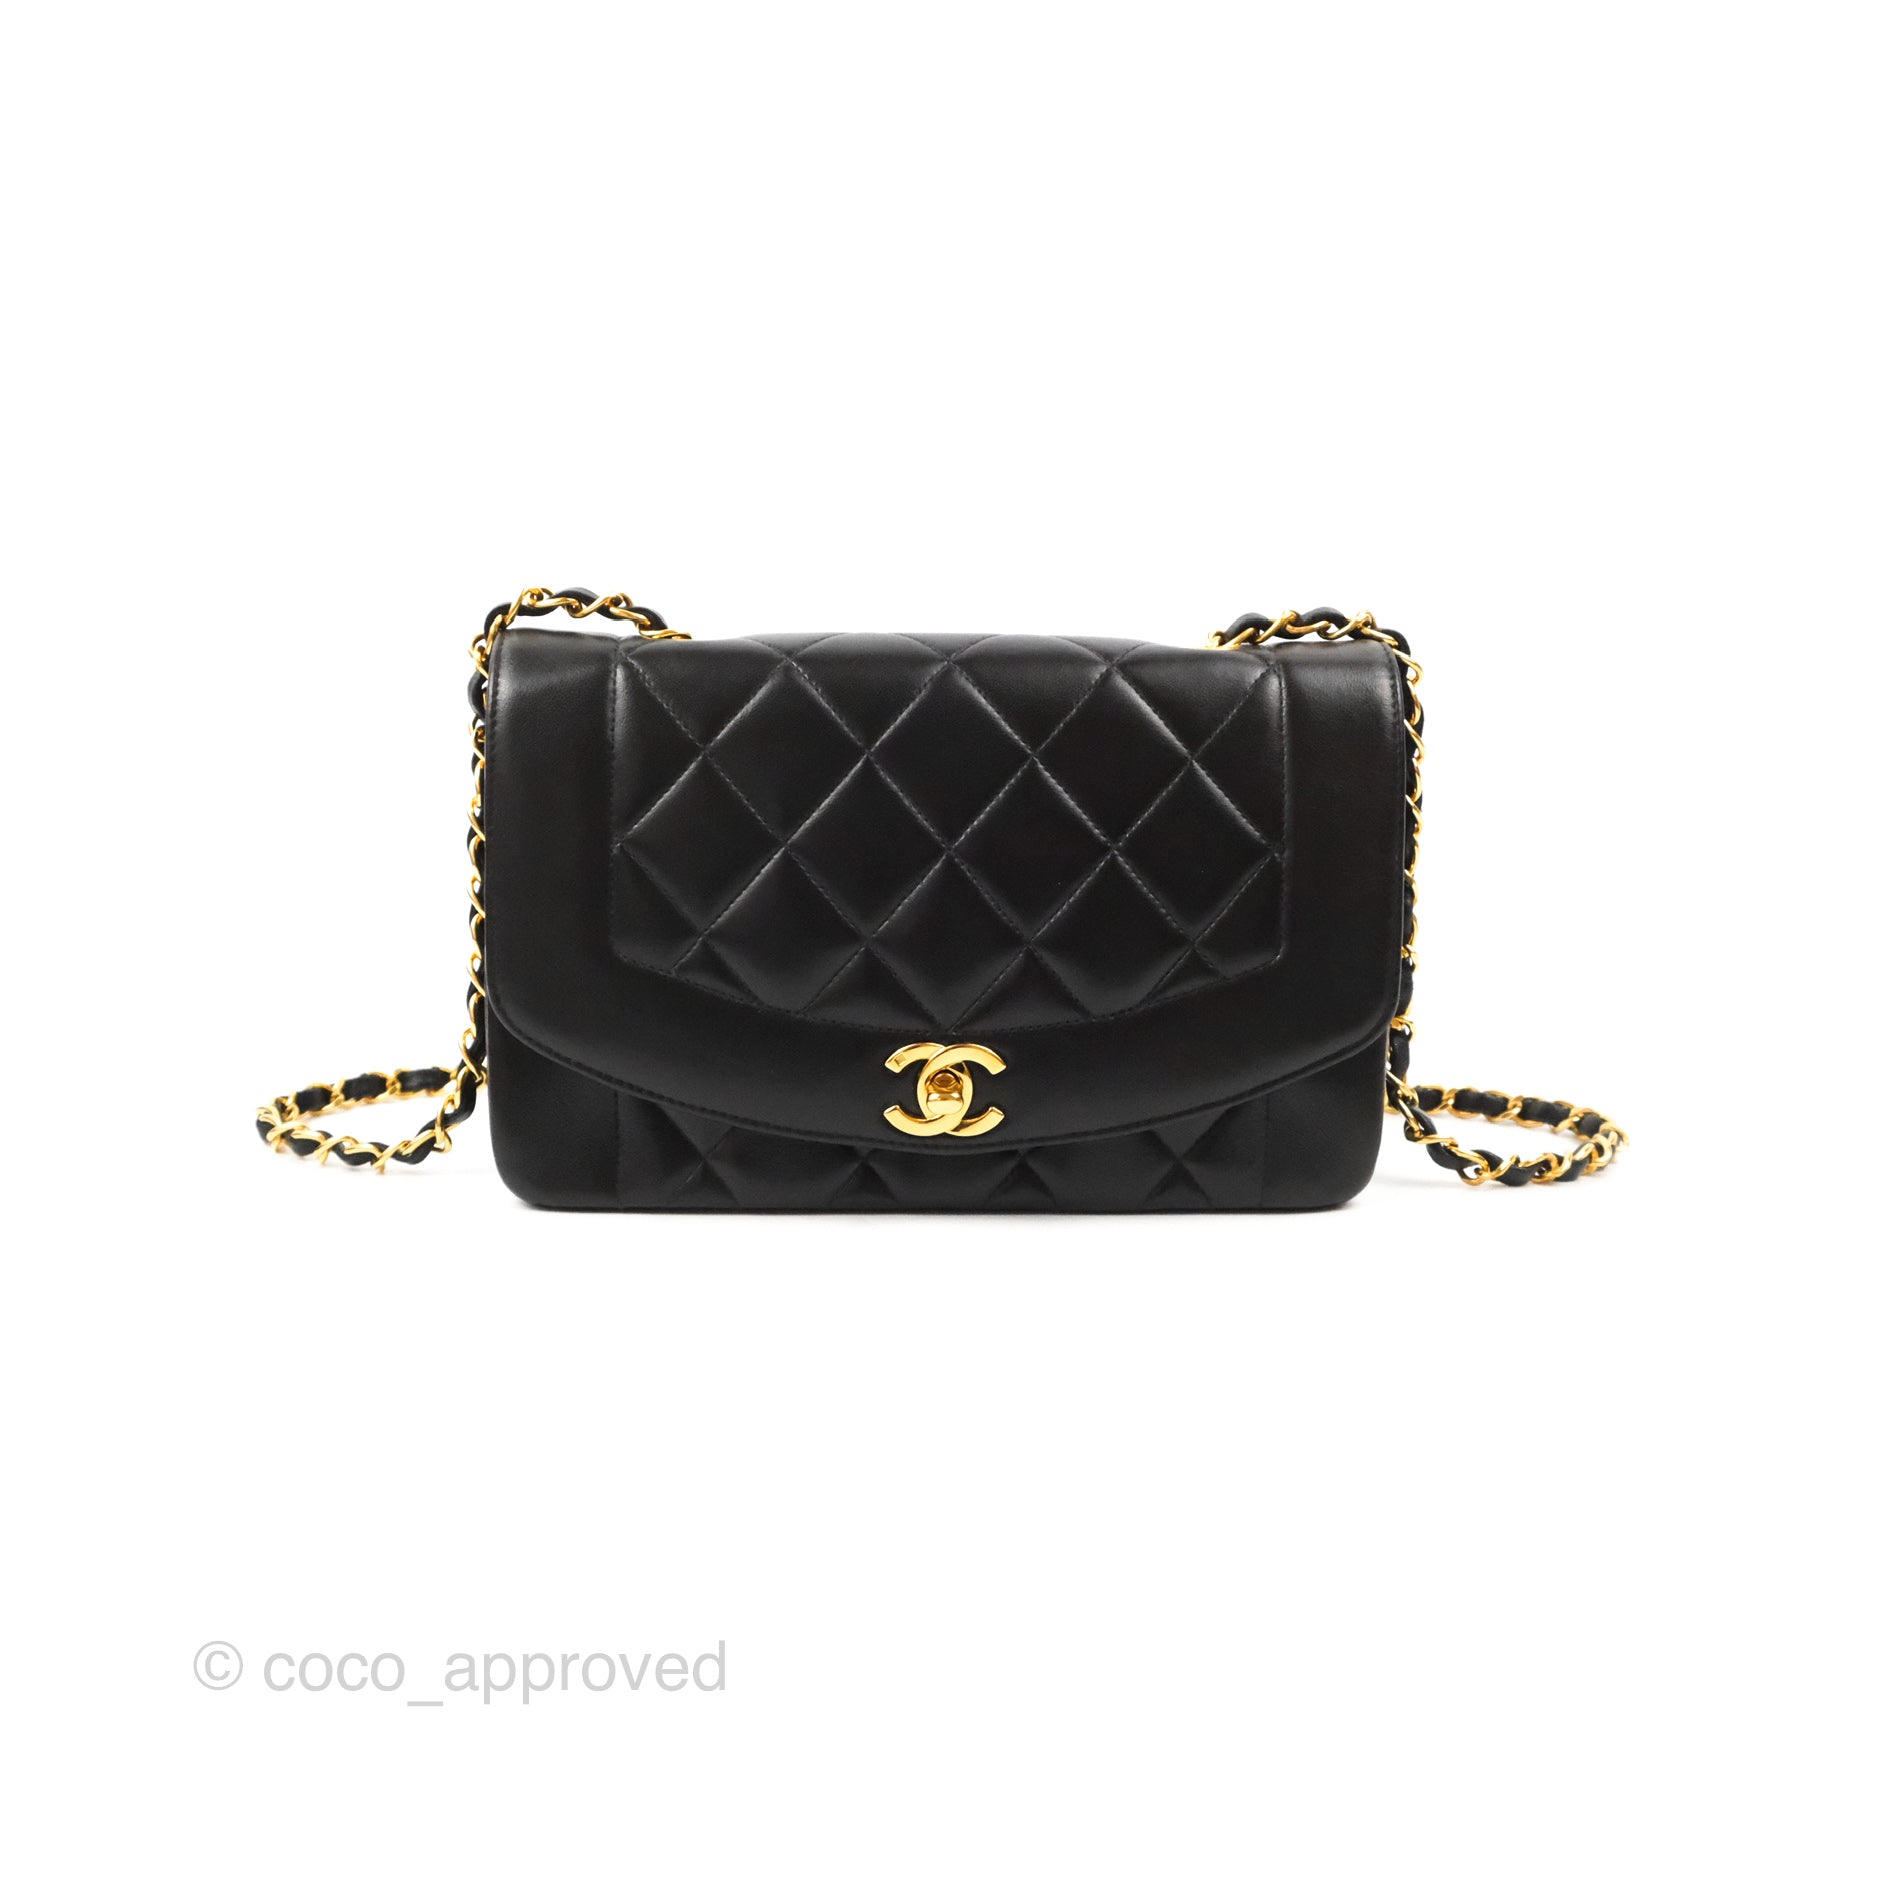 Chanel Black Lambskin Leather Vintage Diana Flap Bag Chanel